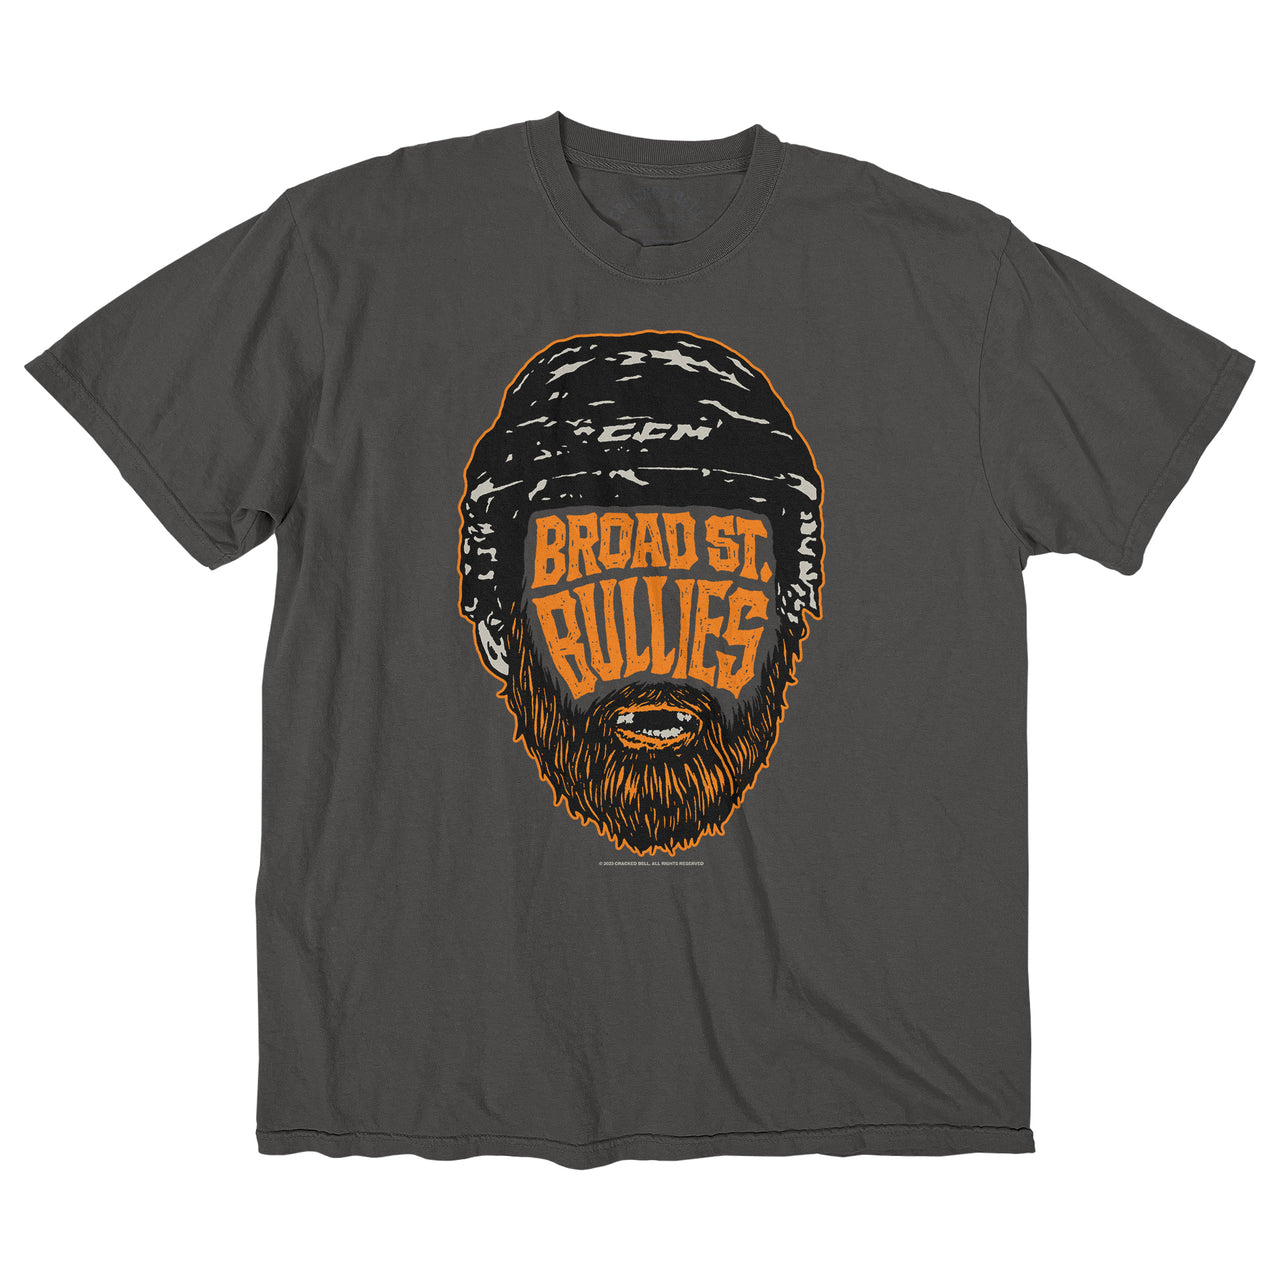 "Bullies" Shirt